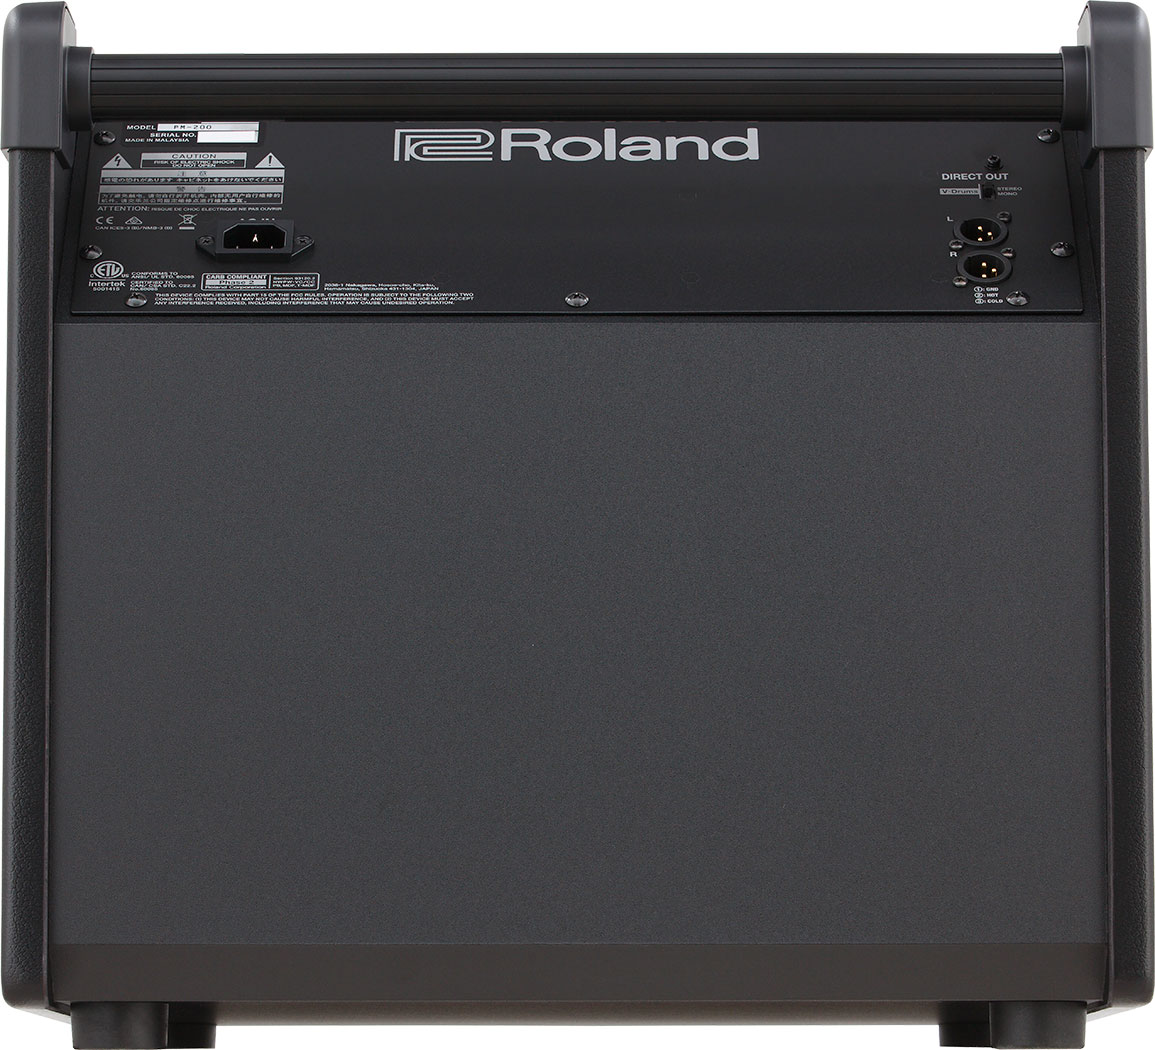 Roland Pm-200 - Electronic drum monitoring - Variation 2